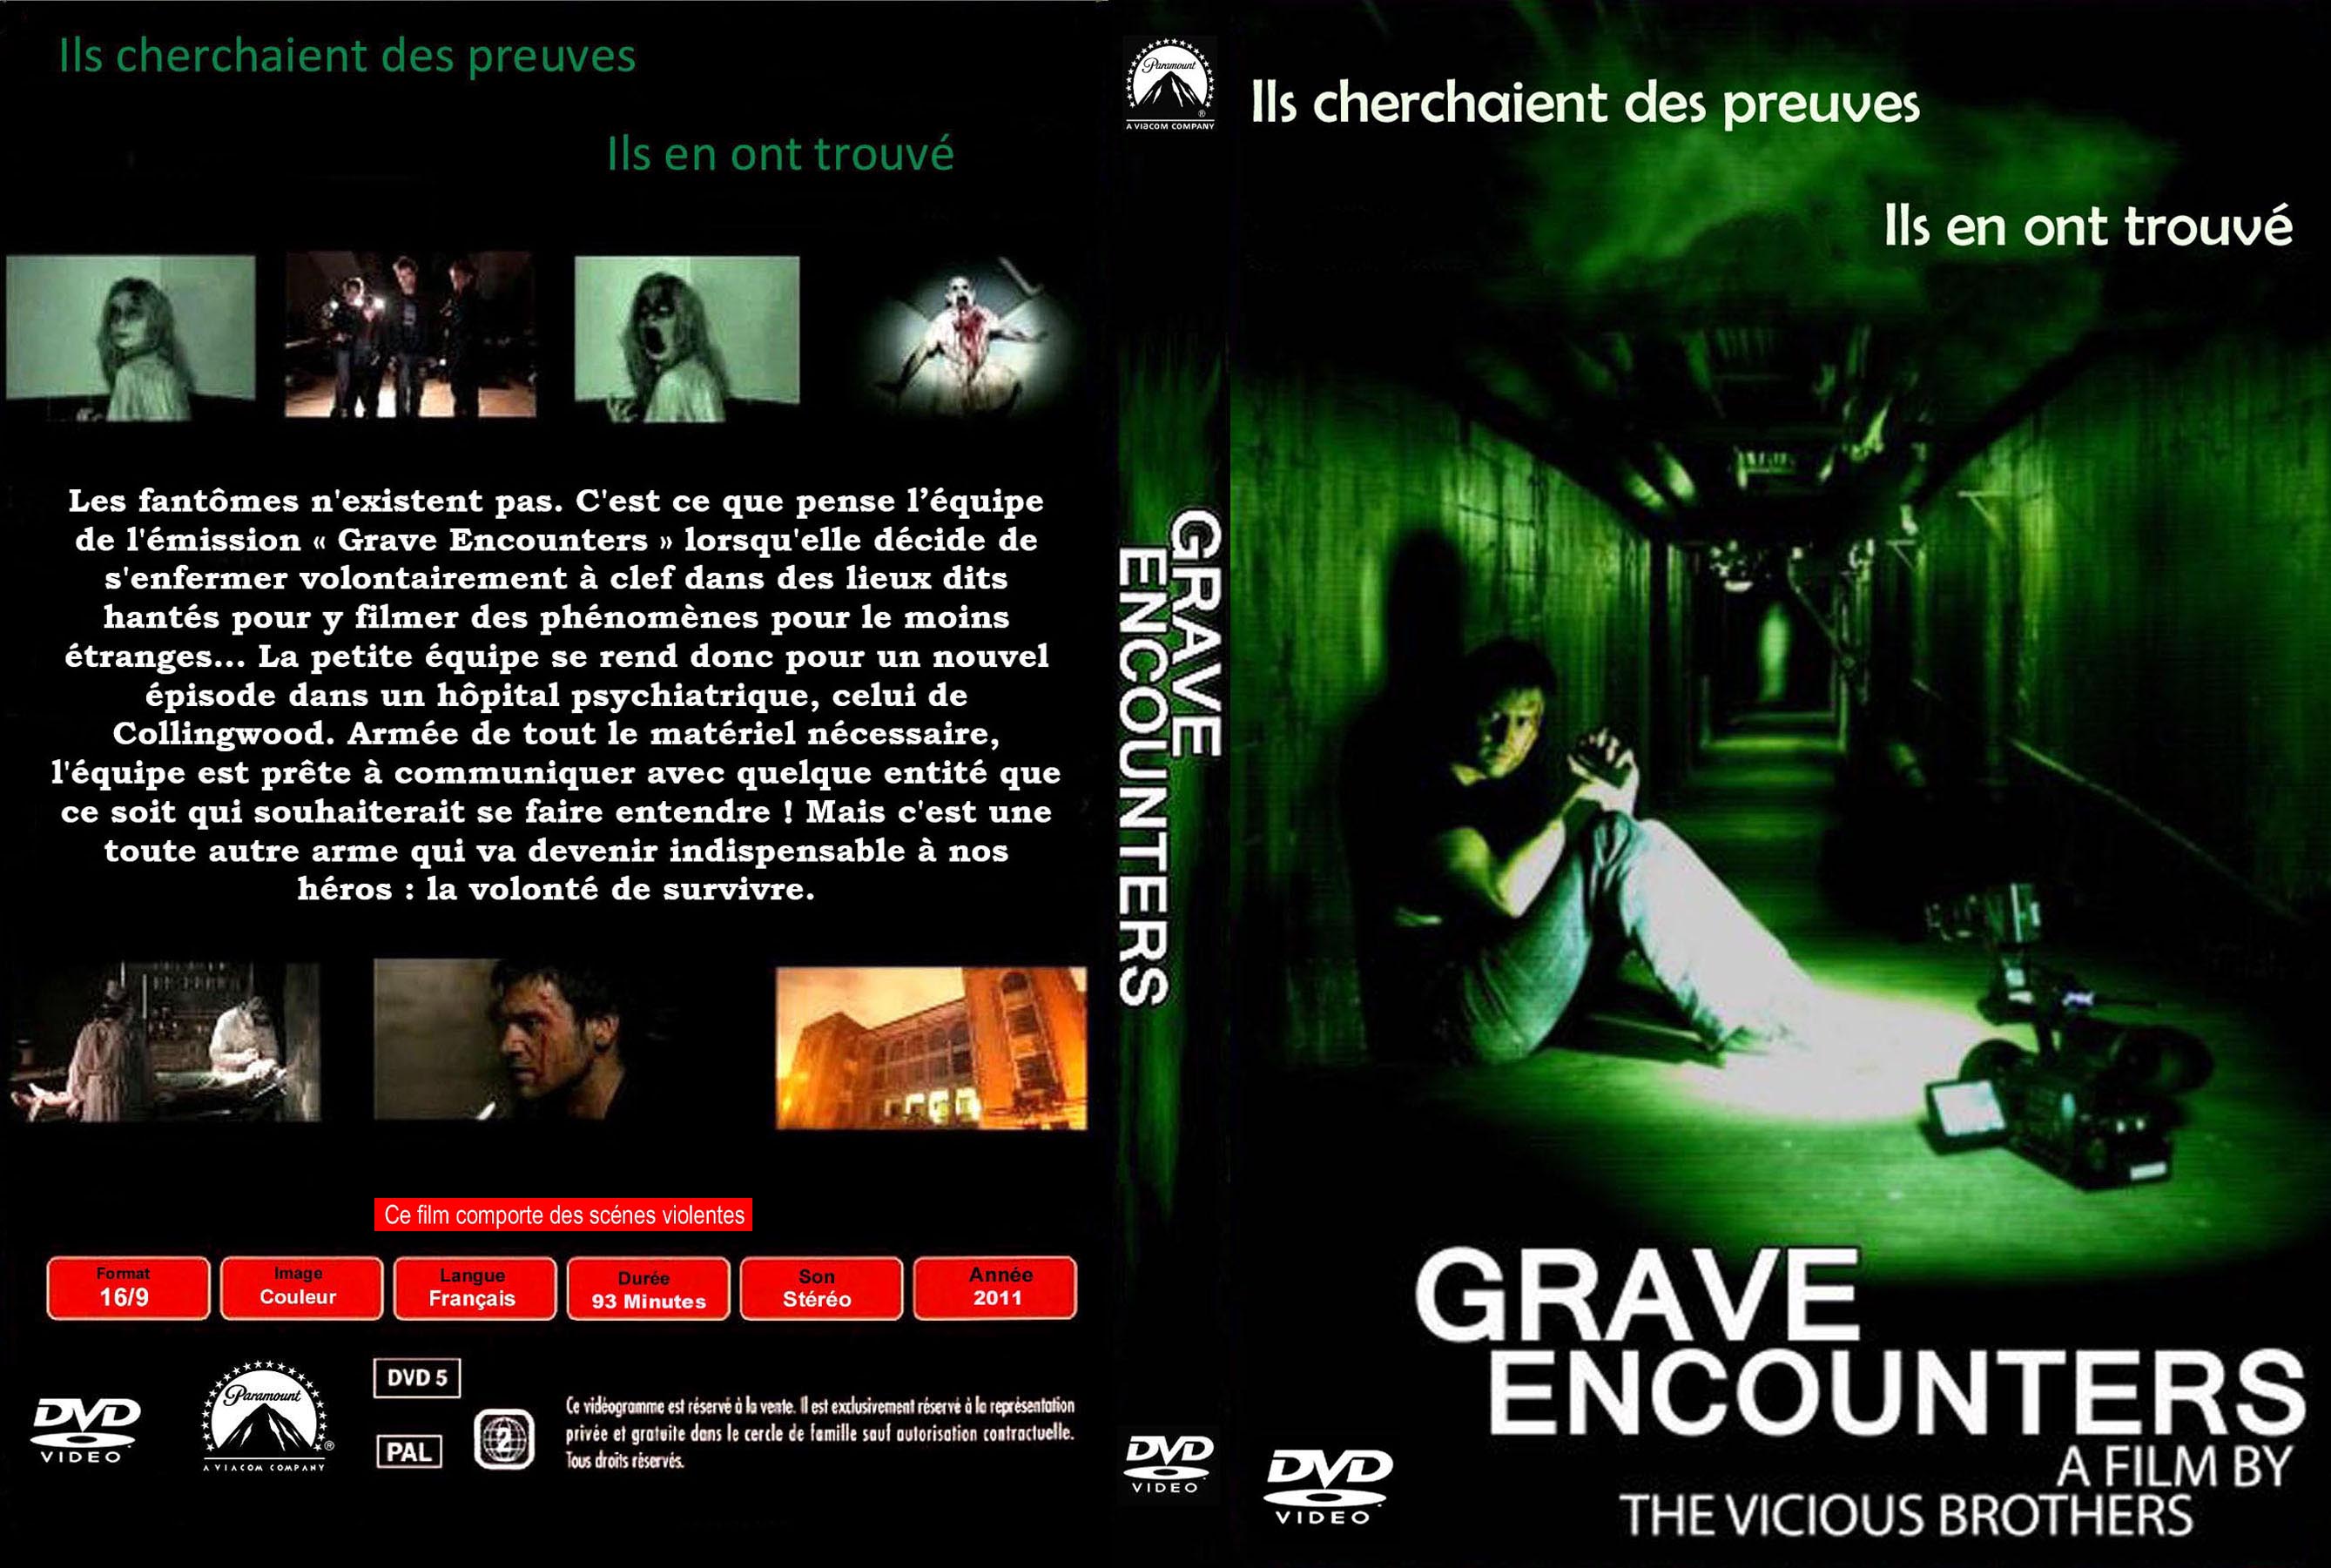 Jaquette DVD Grave encounters custom v1